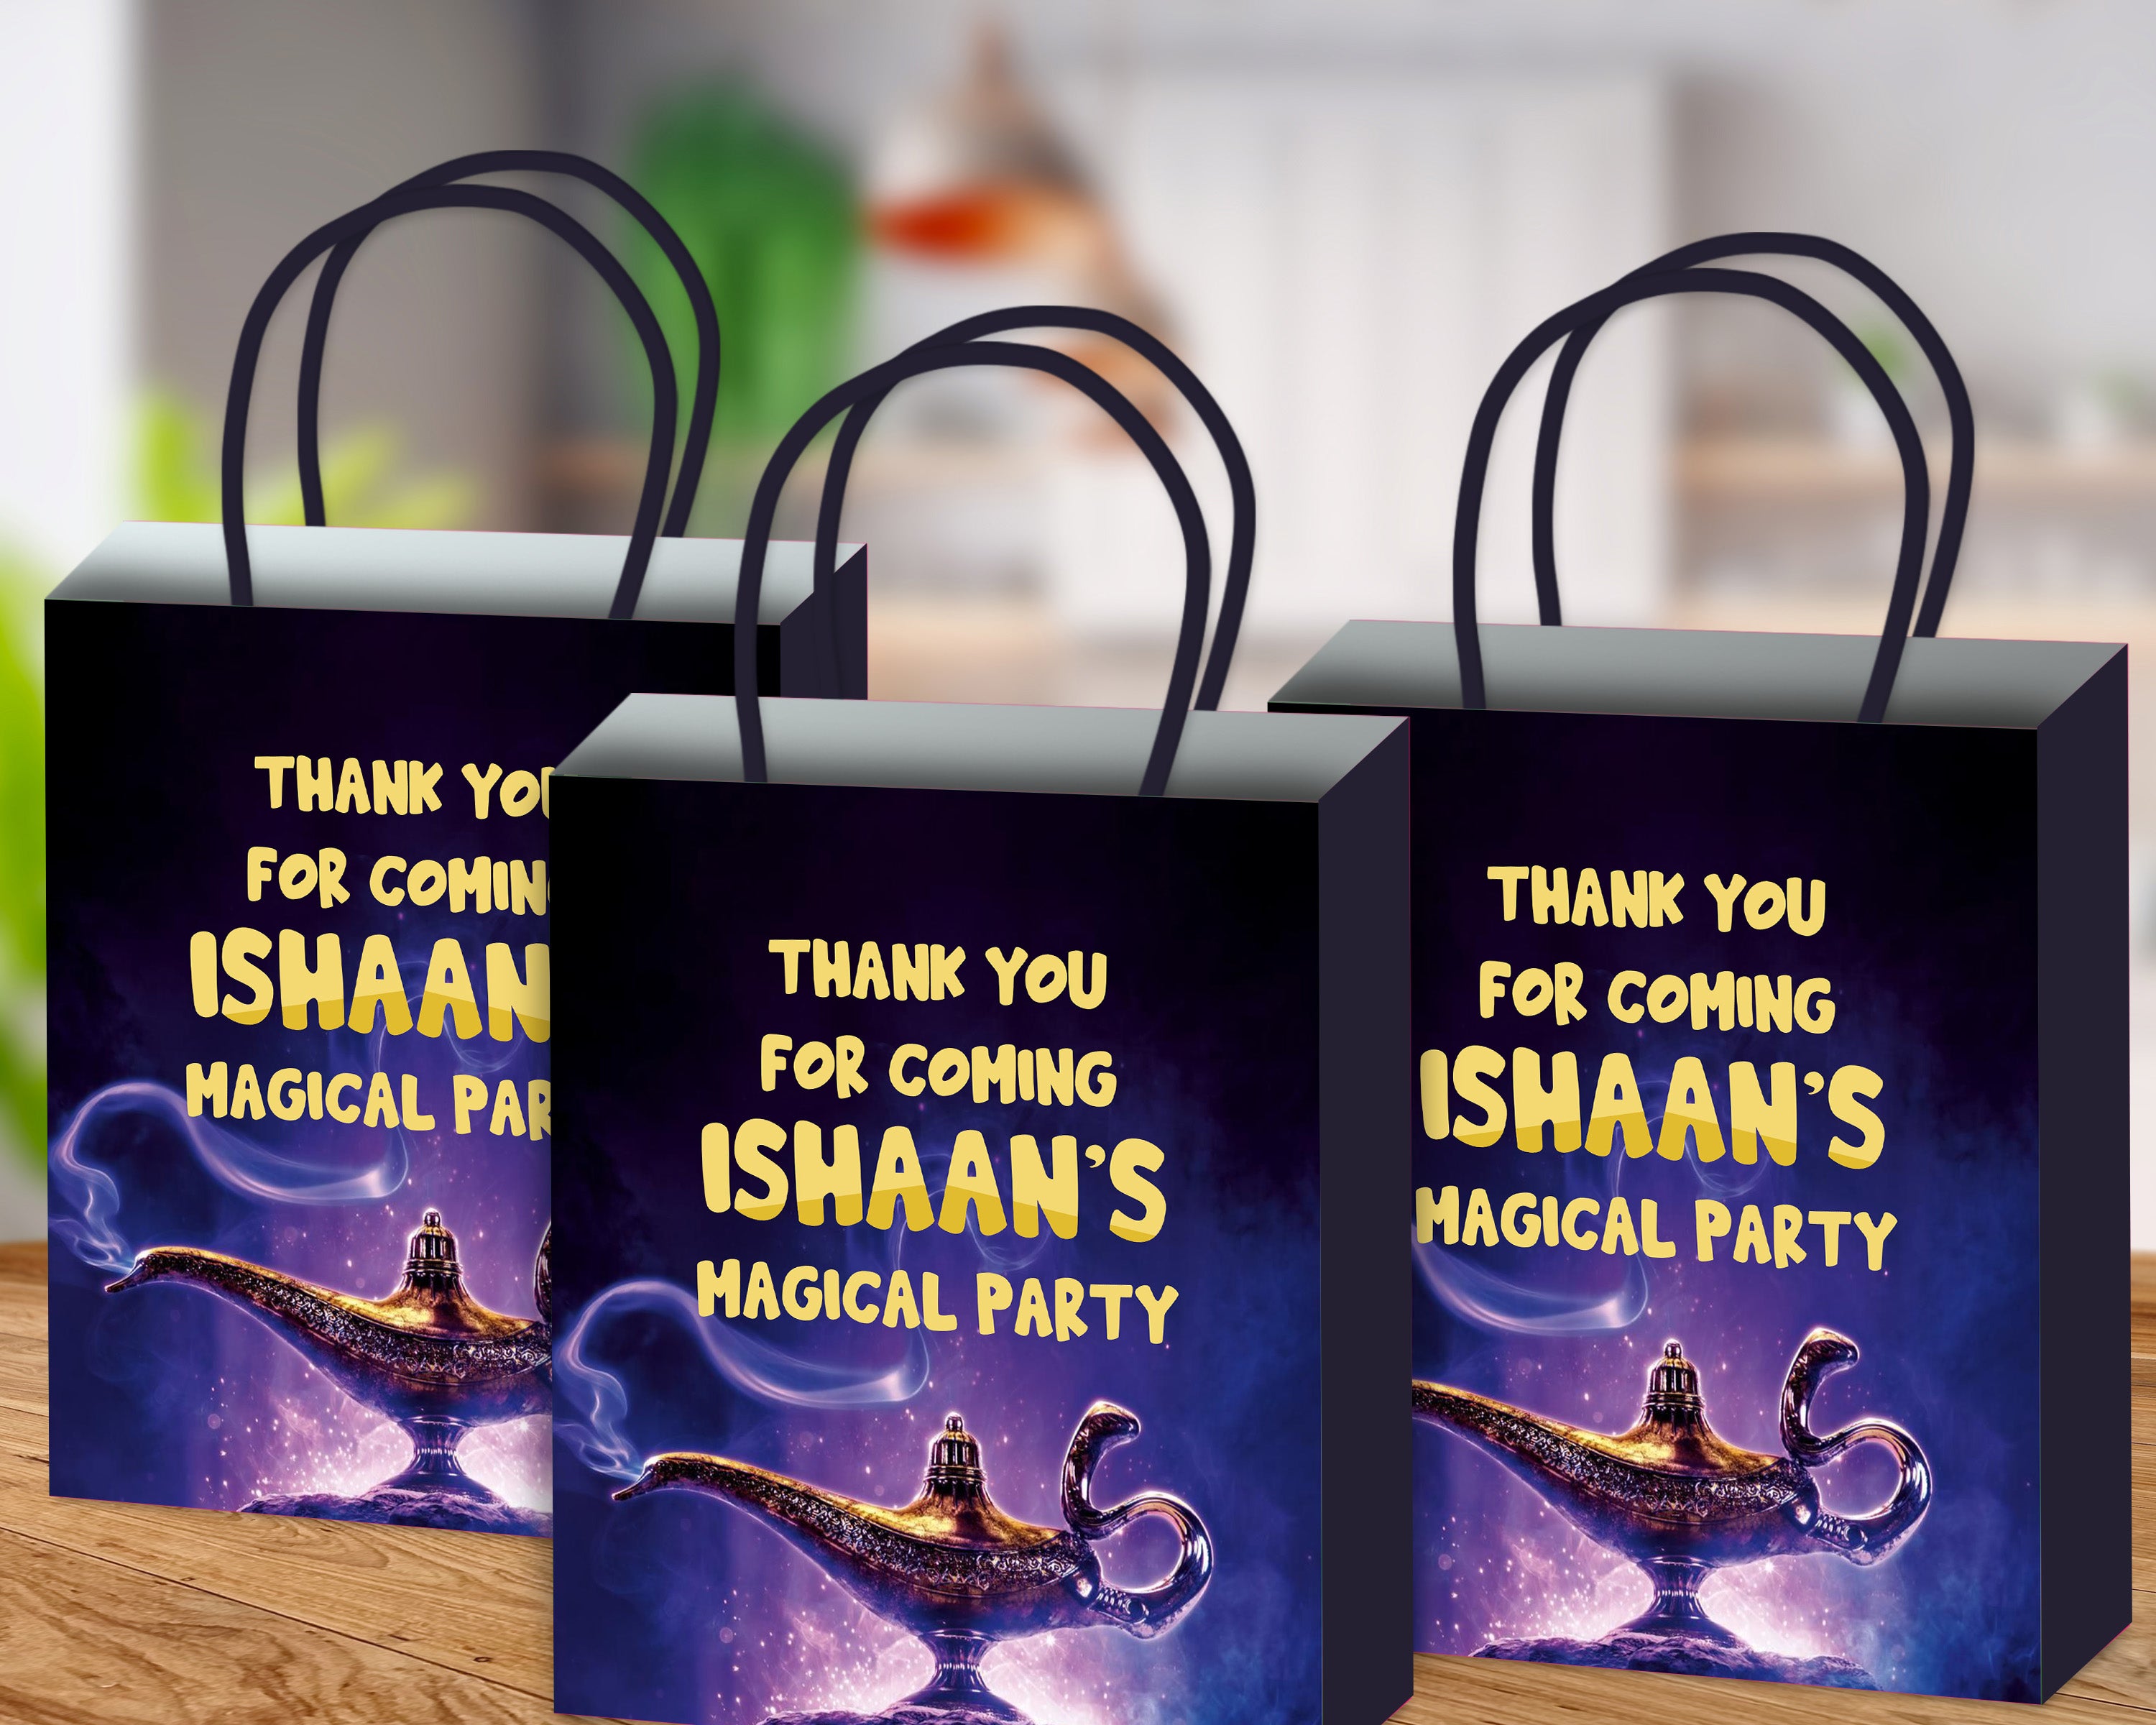 PSI Aladdin Theme Return Gift Bag